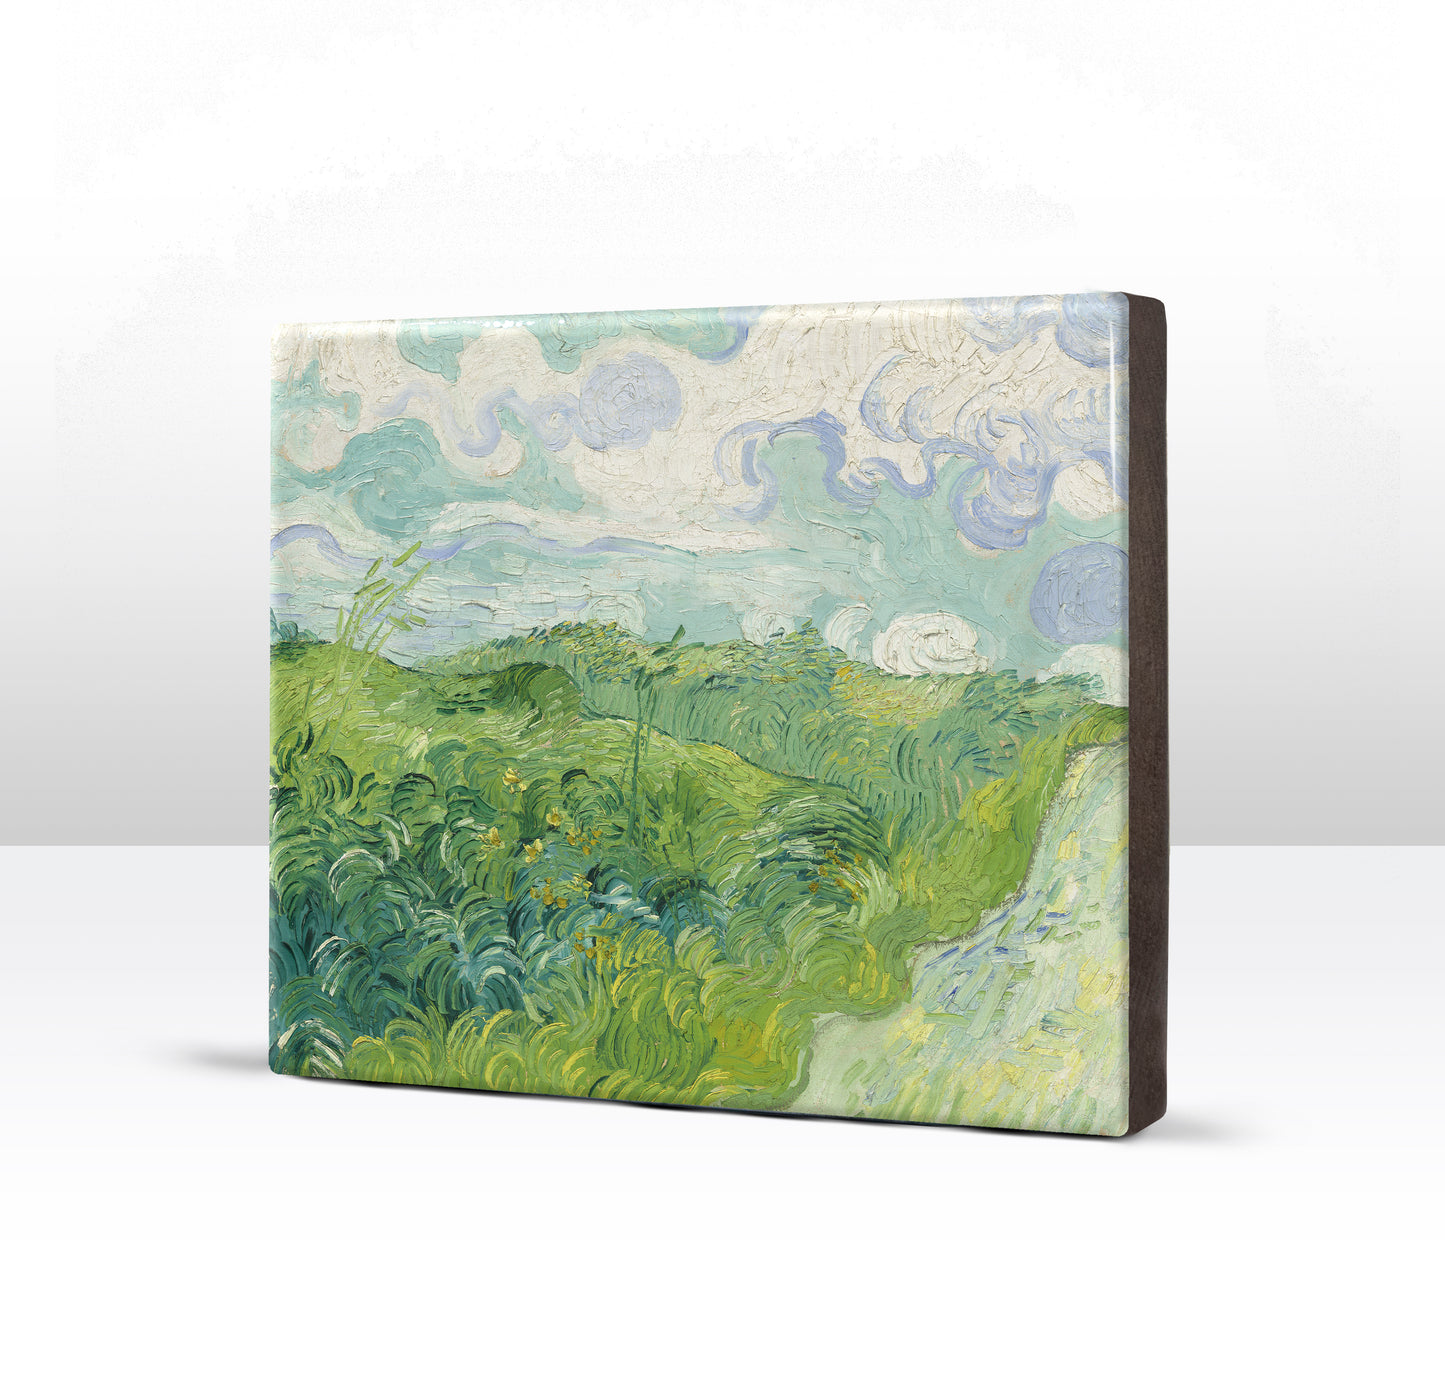 Laqueprint - Groene tarwevelden Auvers - Vincent van Gogh - 24x 19,5 cm - LP209